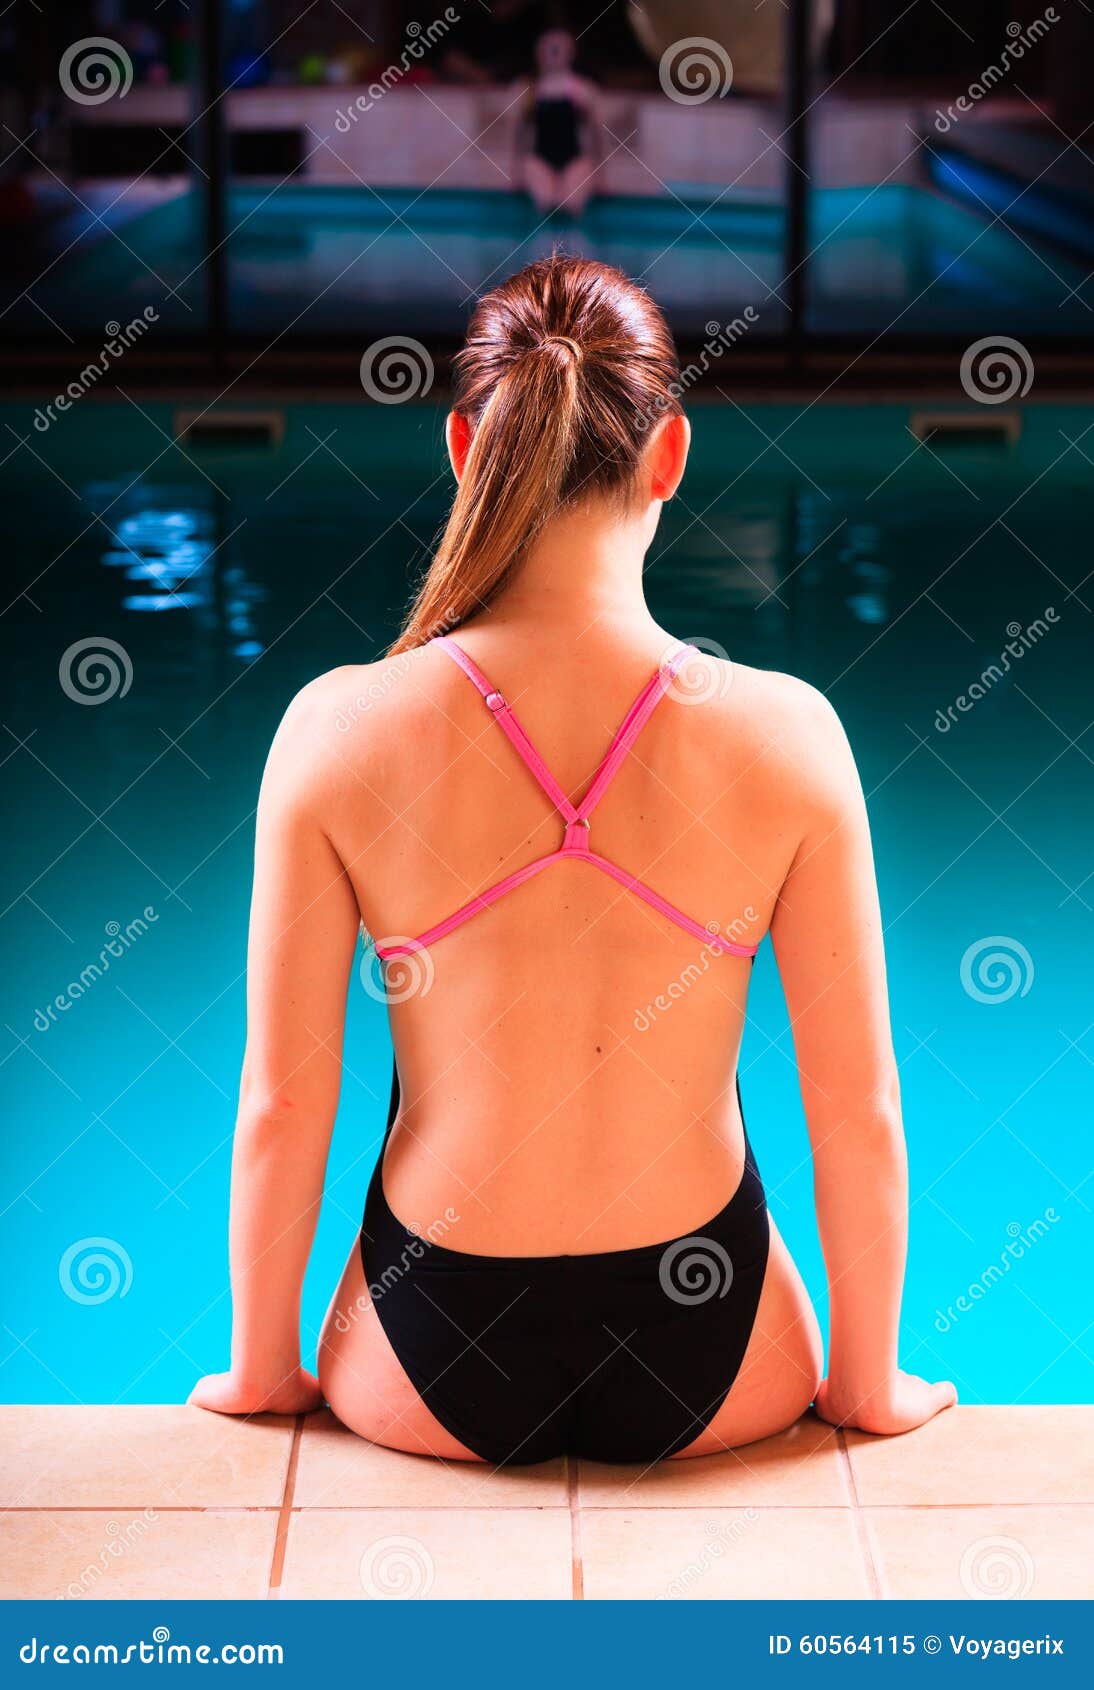 The female body image & swimming.